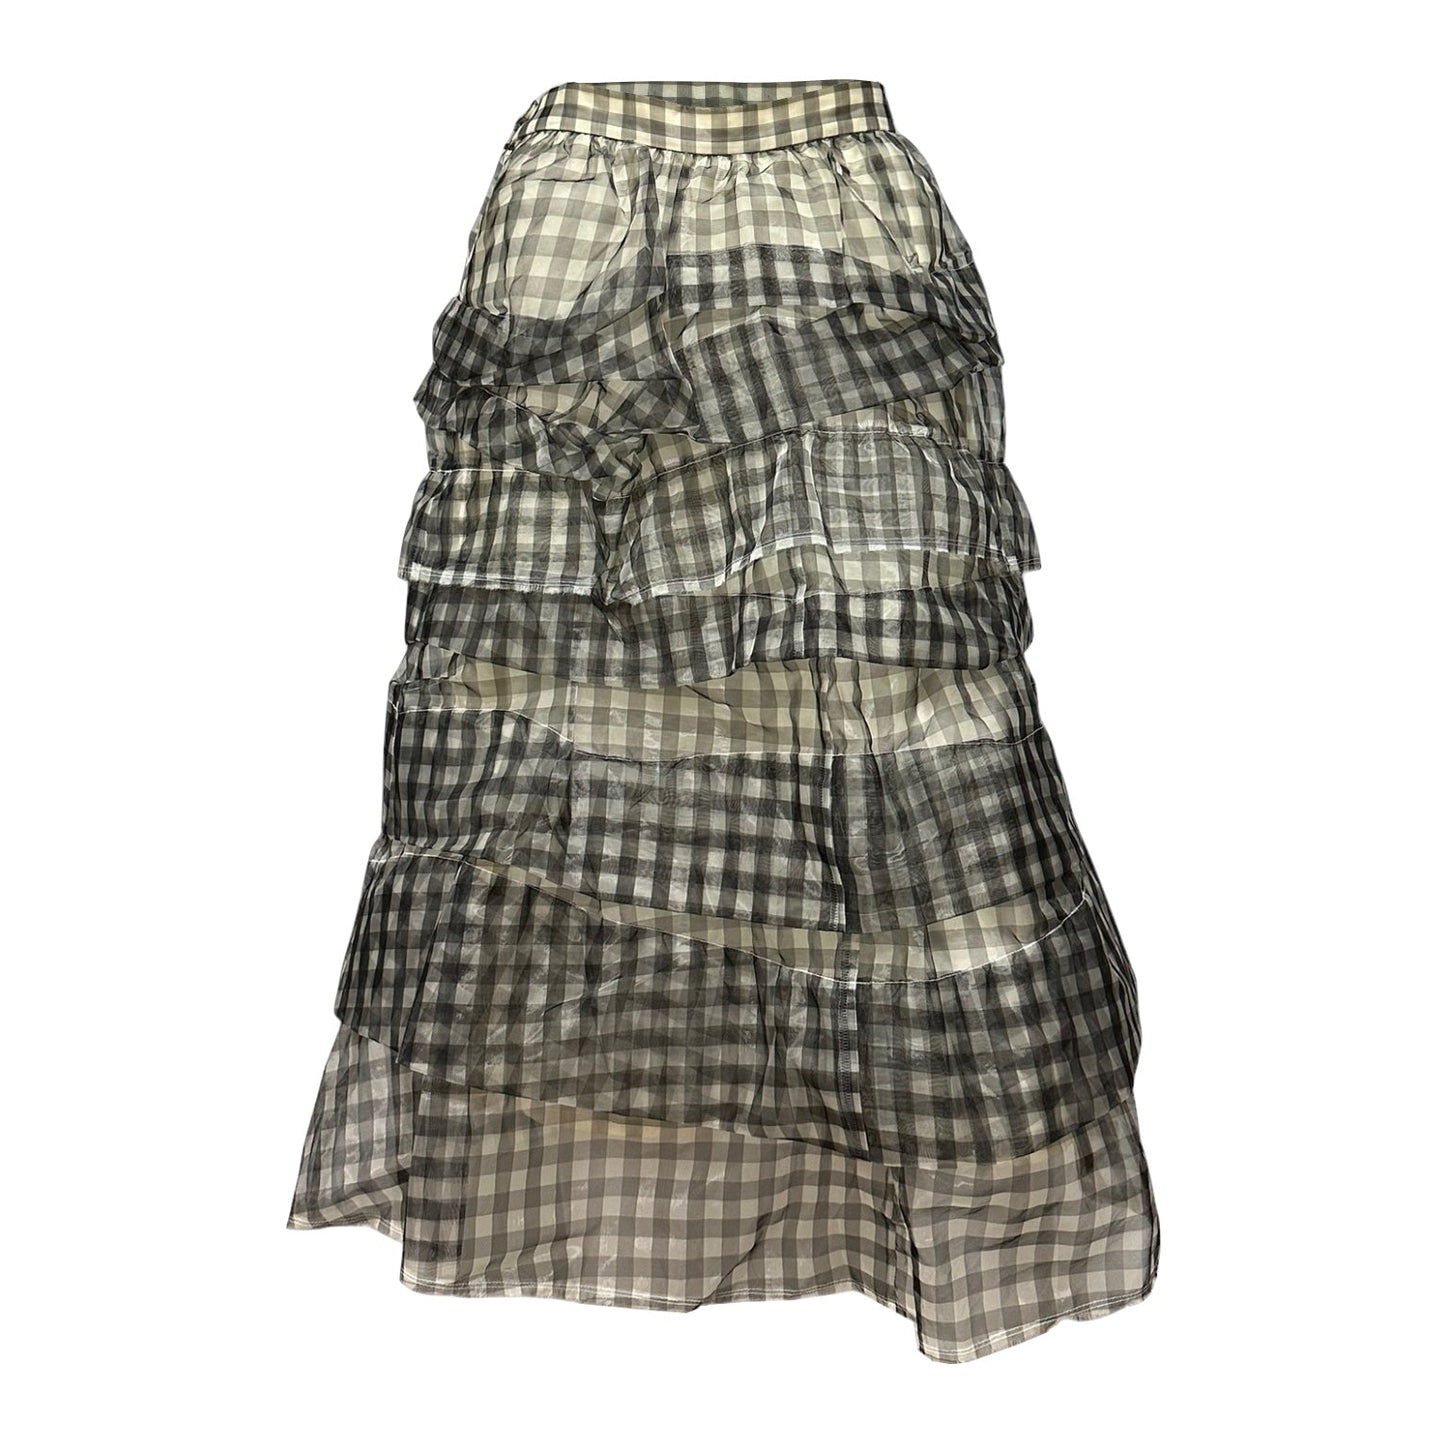 TRICOT COMME DES GARÇONS Checkered Flared Midi Skirt